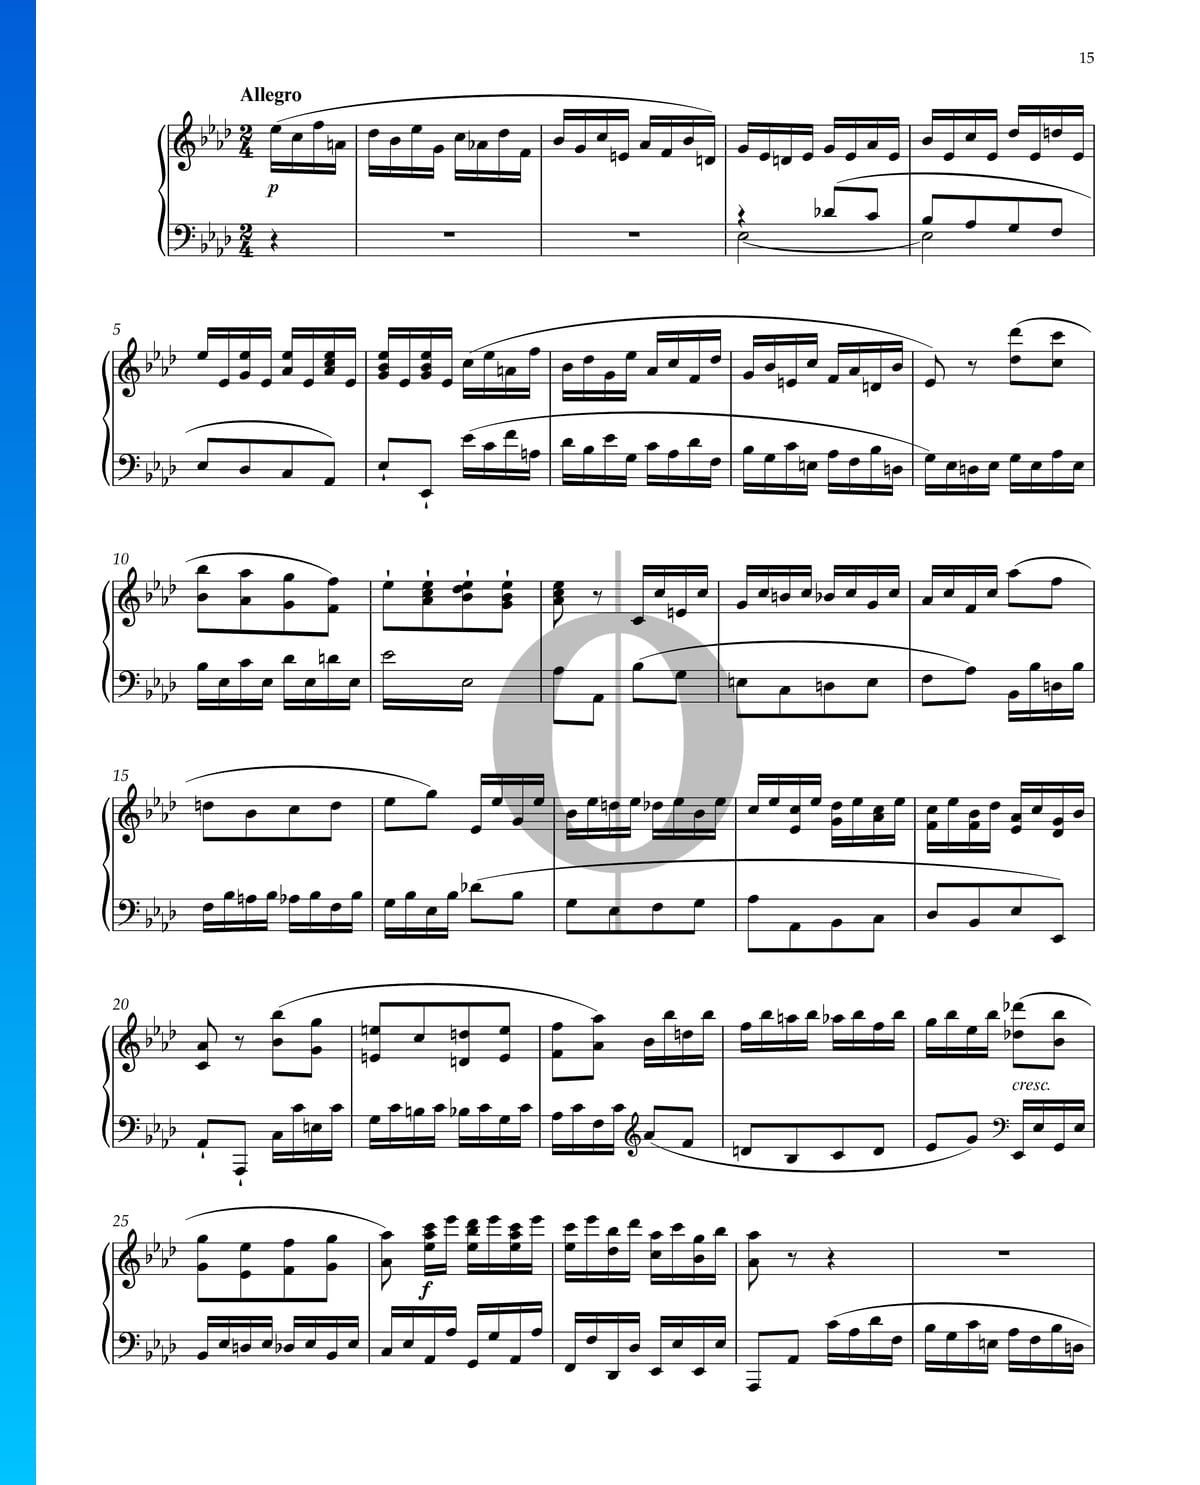 Grande Sonata Funeral March Op 26 4 Allegro Sheet